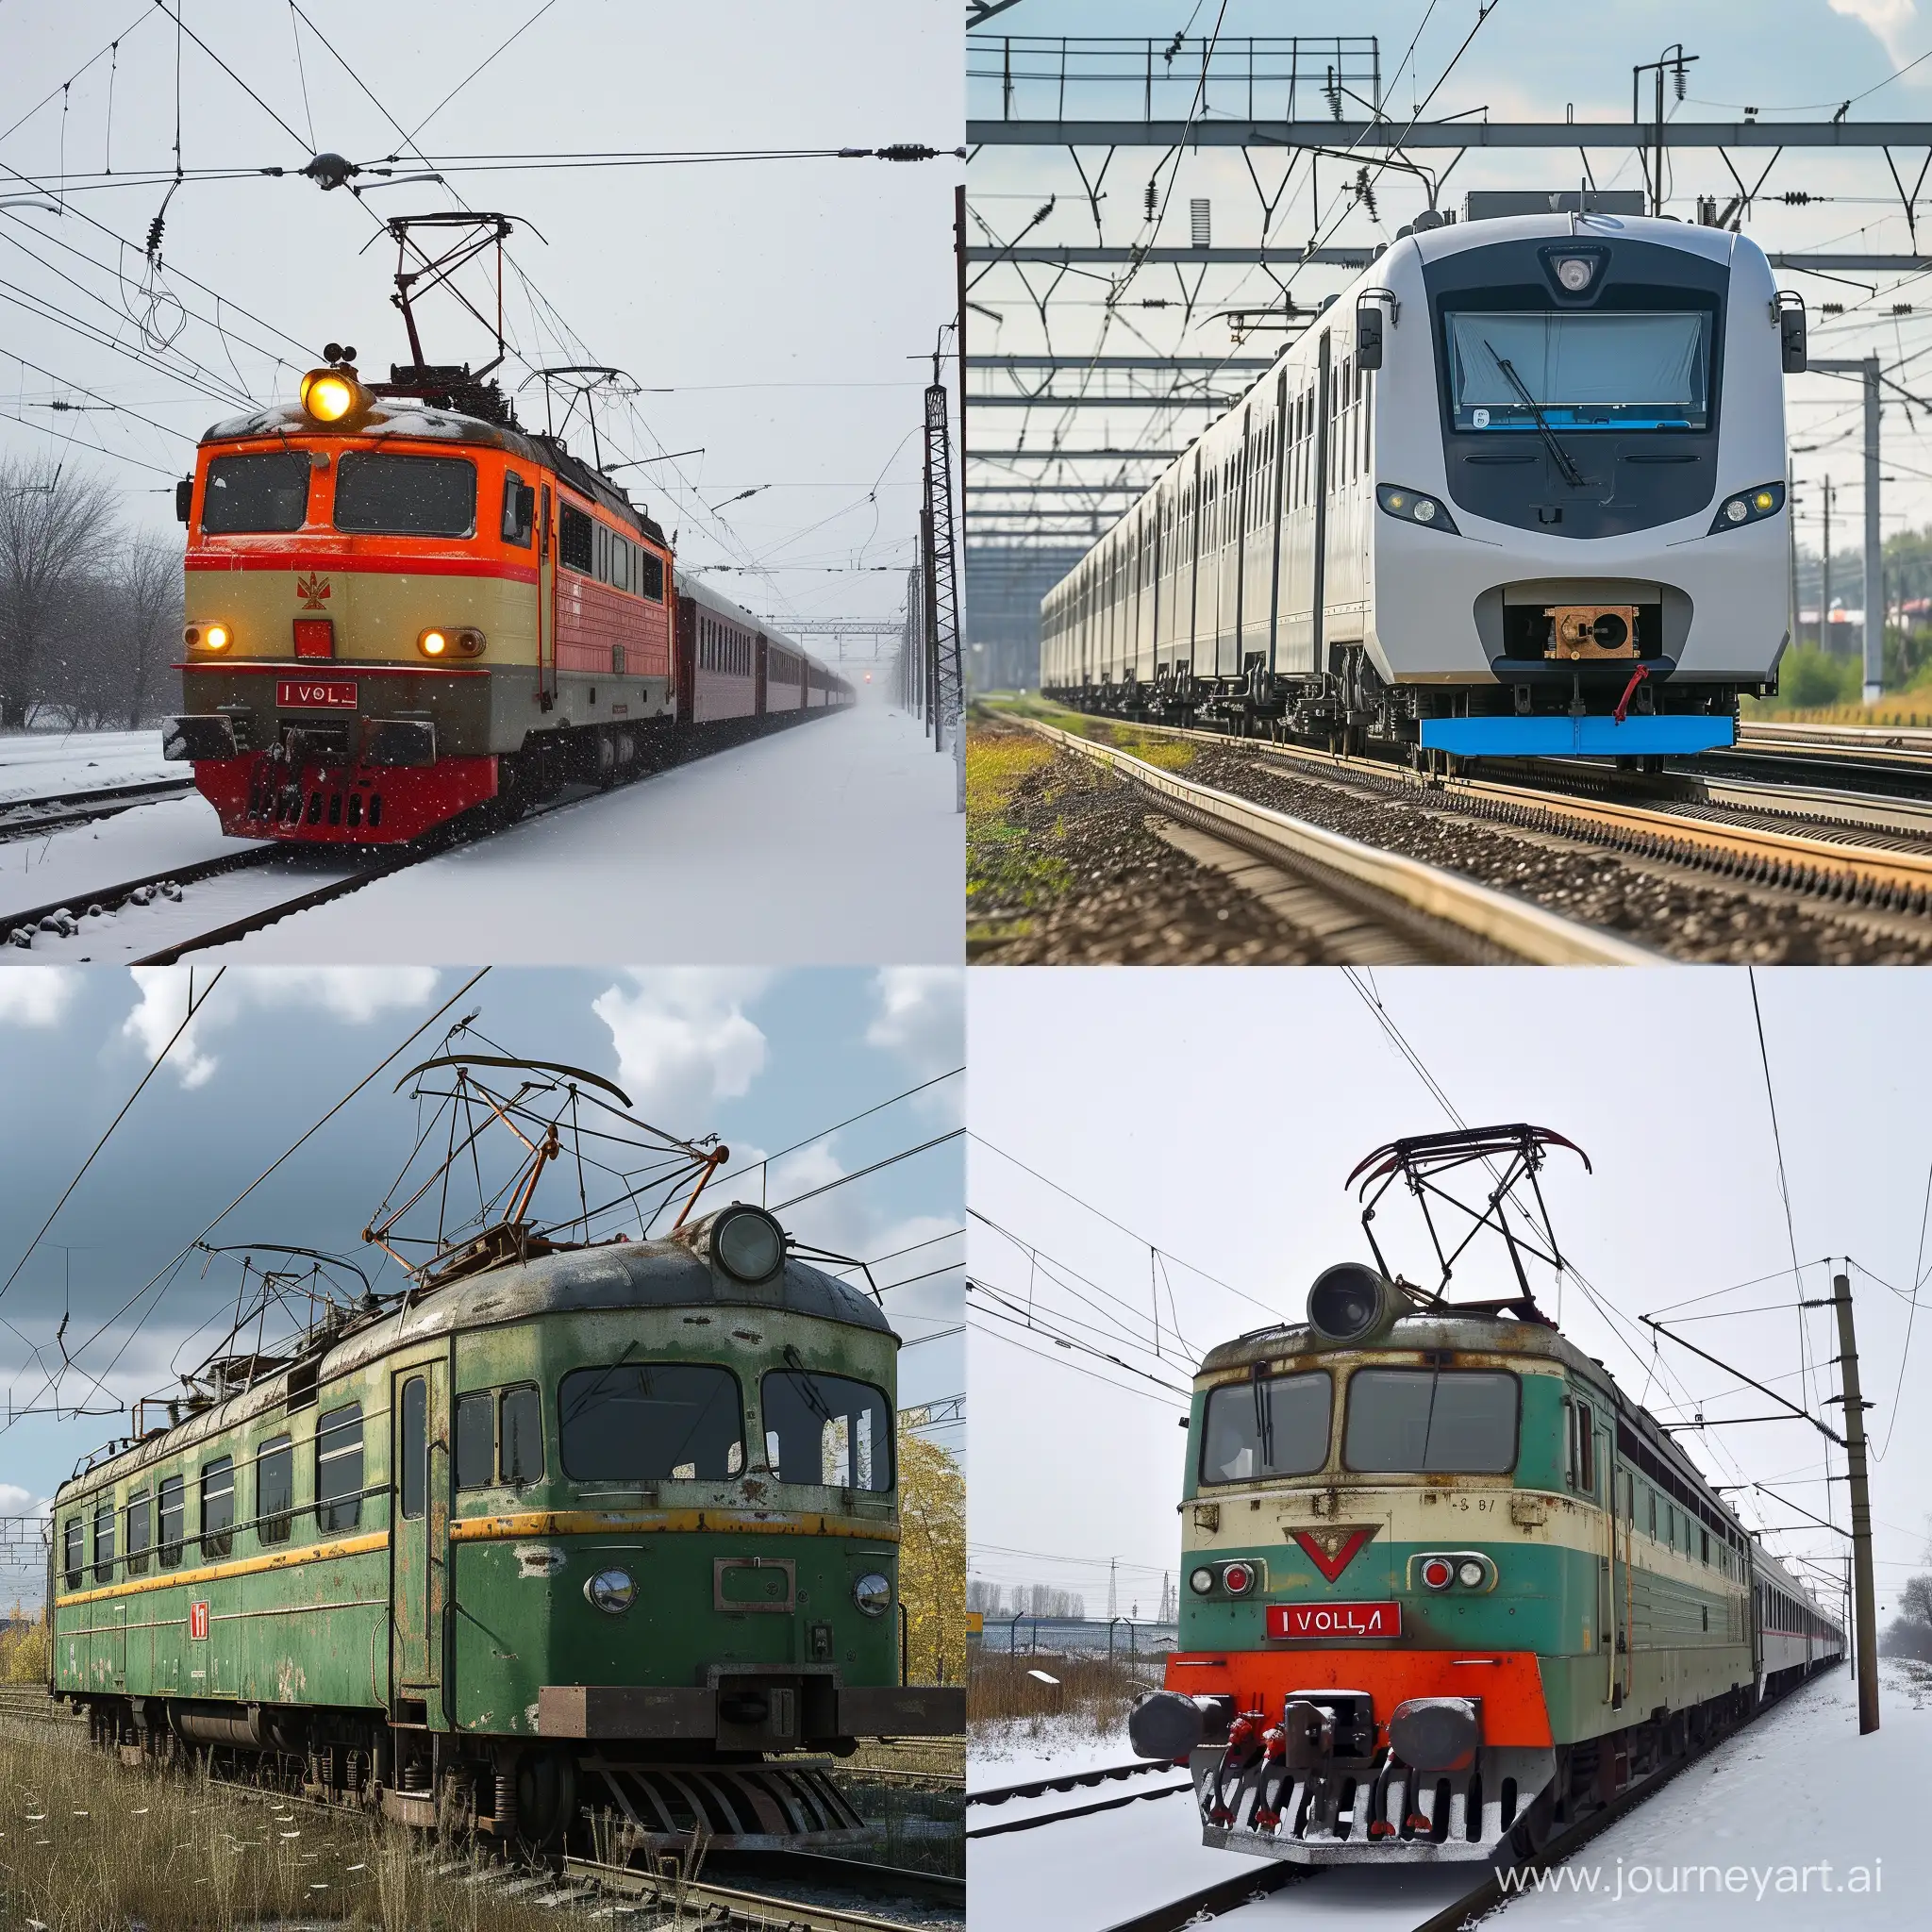 Modern-Electric-Train-Ivolga-2-at-Speed-Model-78012